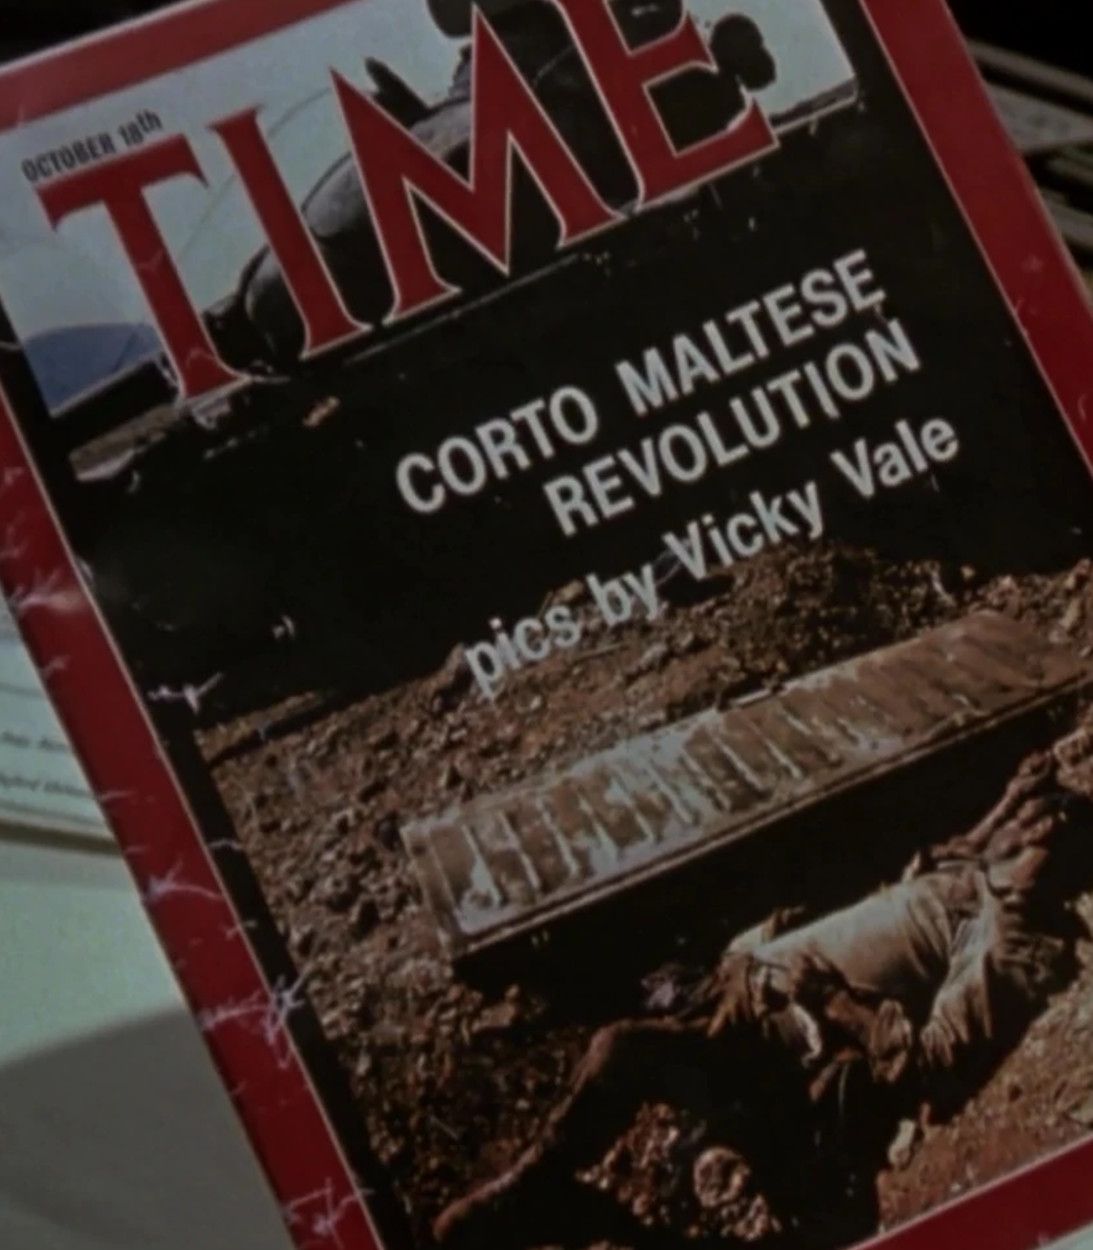 Batman 1989 Movie Corto Maltese Revoluition Time Magazine Cover Vicky Vale vertical